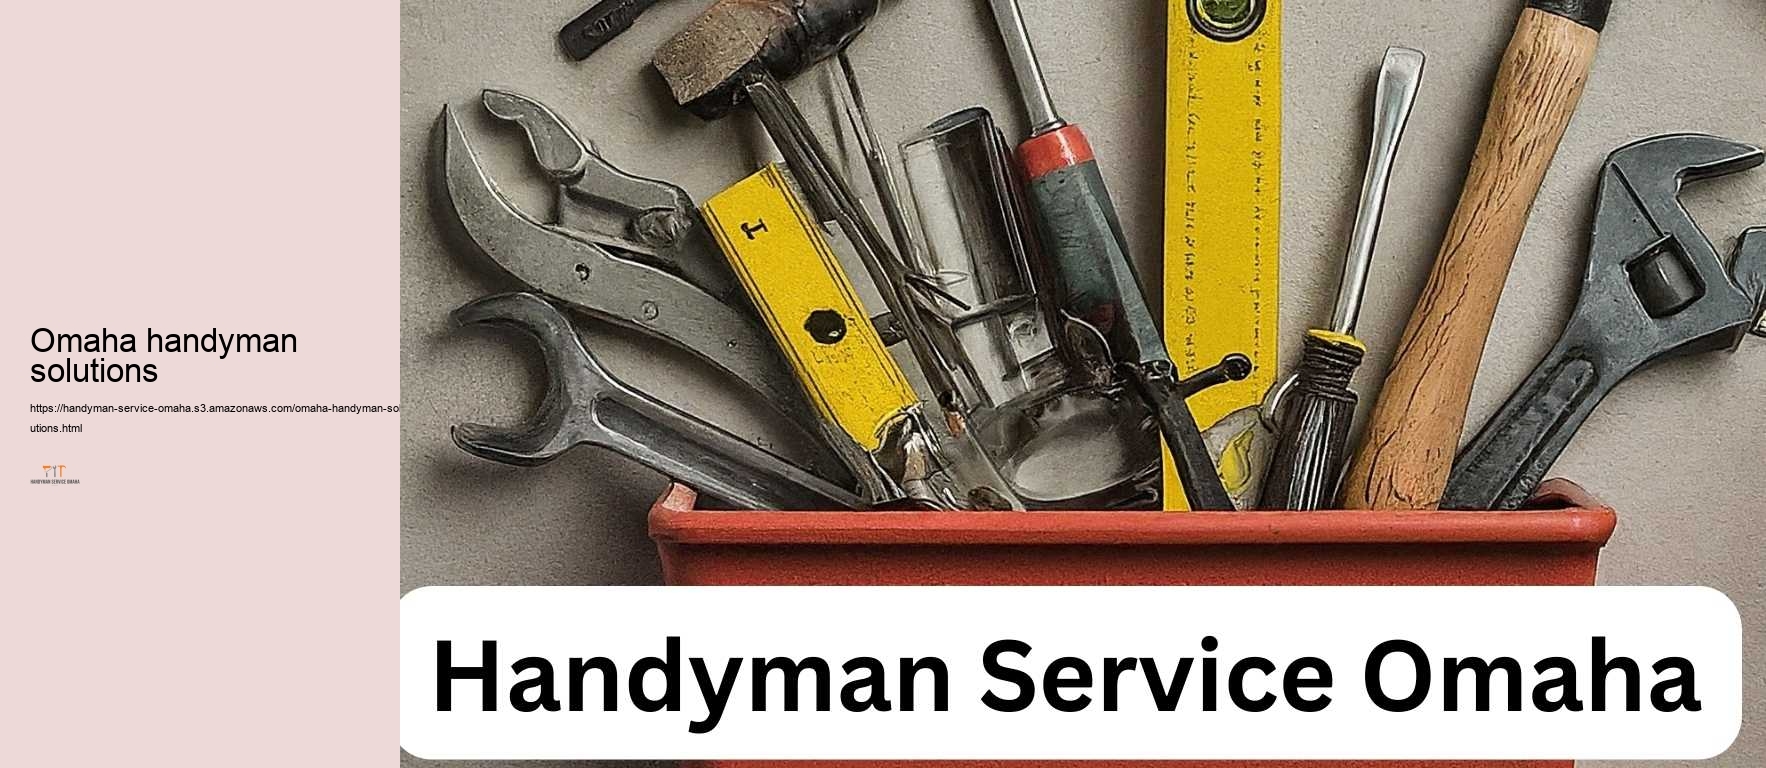 Omaha handyman solutions